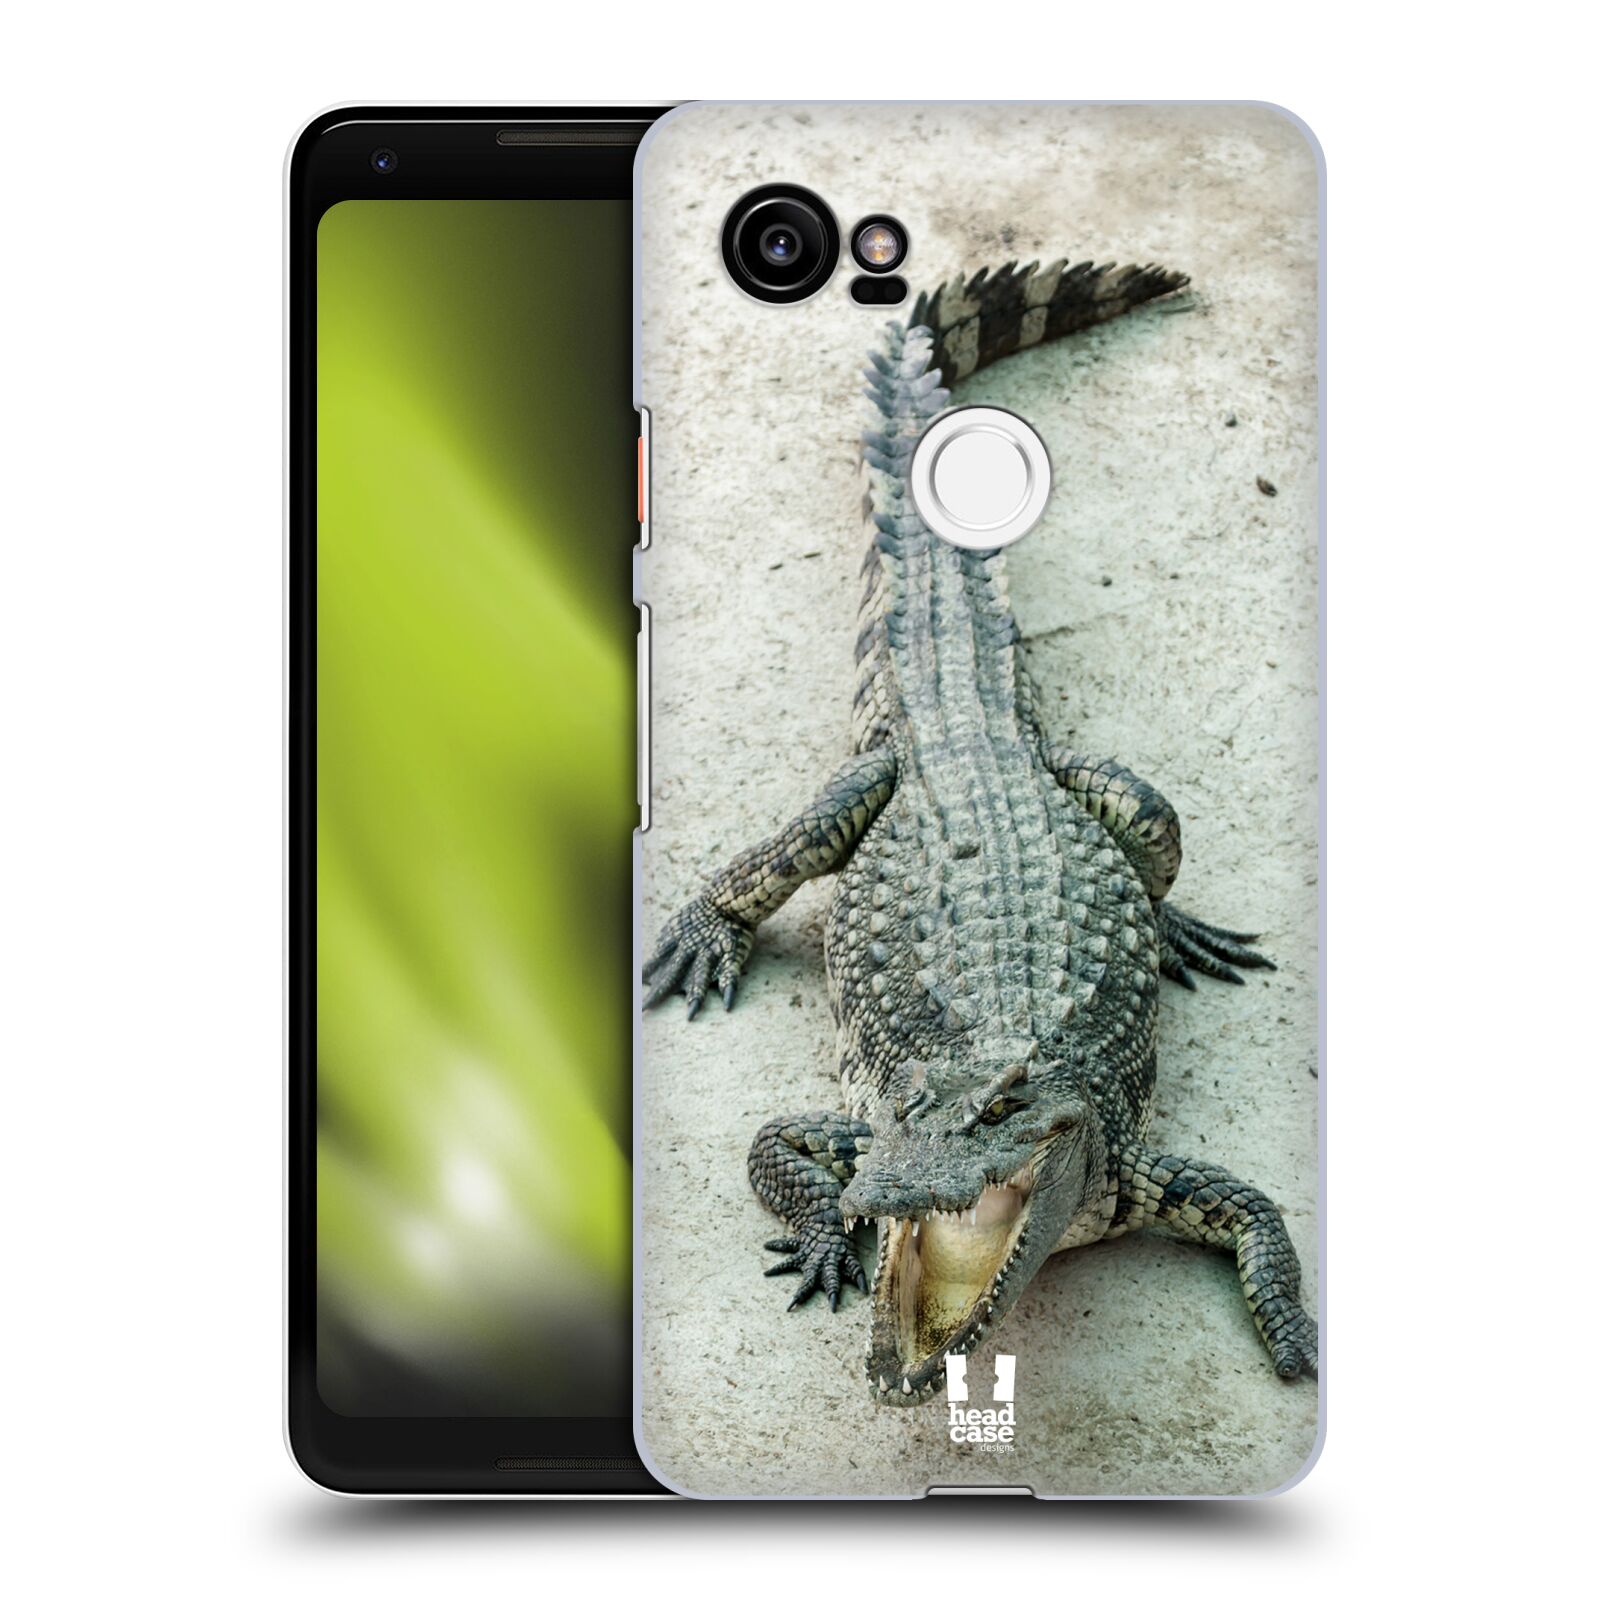 HEAD CASE plastový obal na mobil Google Pixel 2 XL vzor Divočina, Divoký život a zvířata foto KROKODÝL, KAJMAN